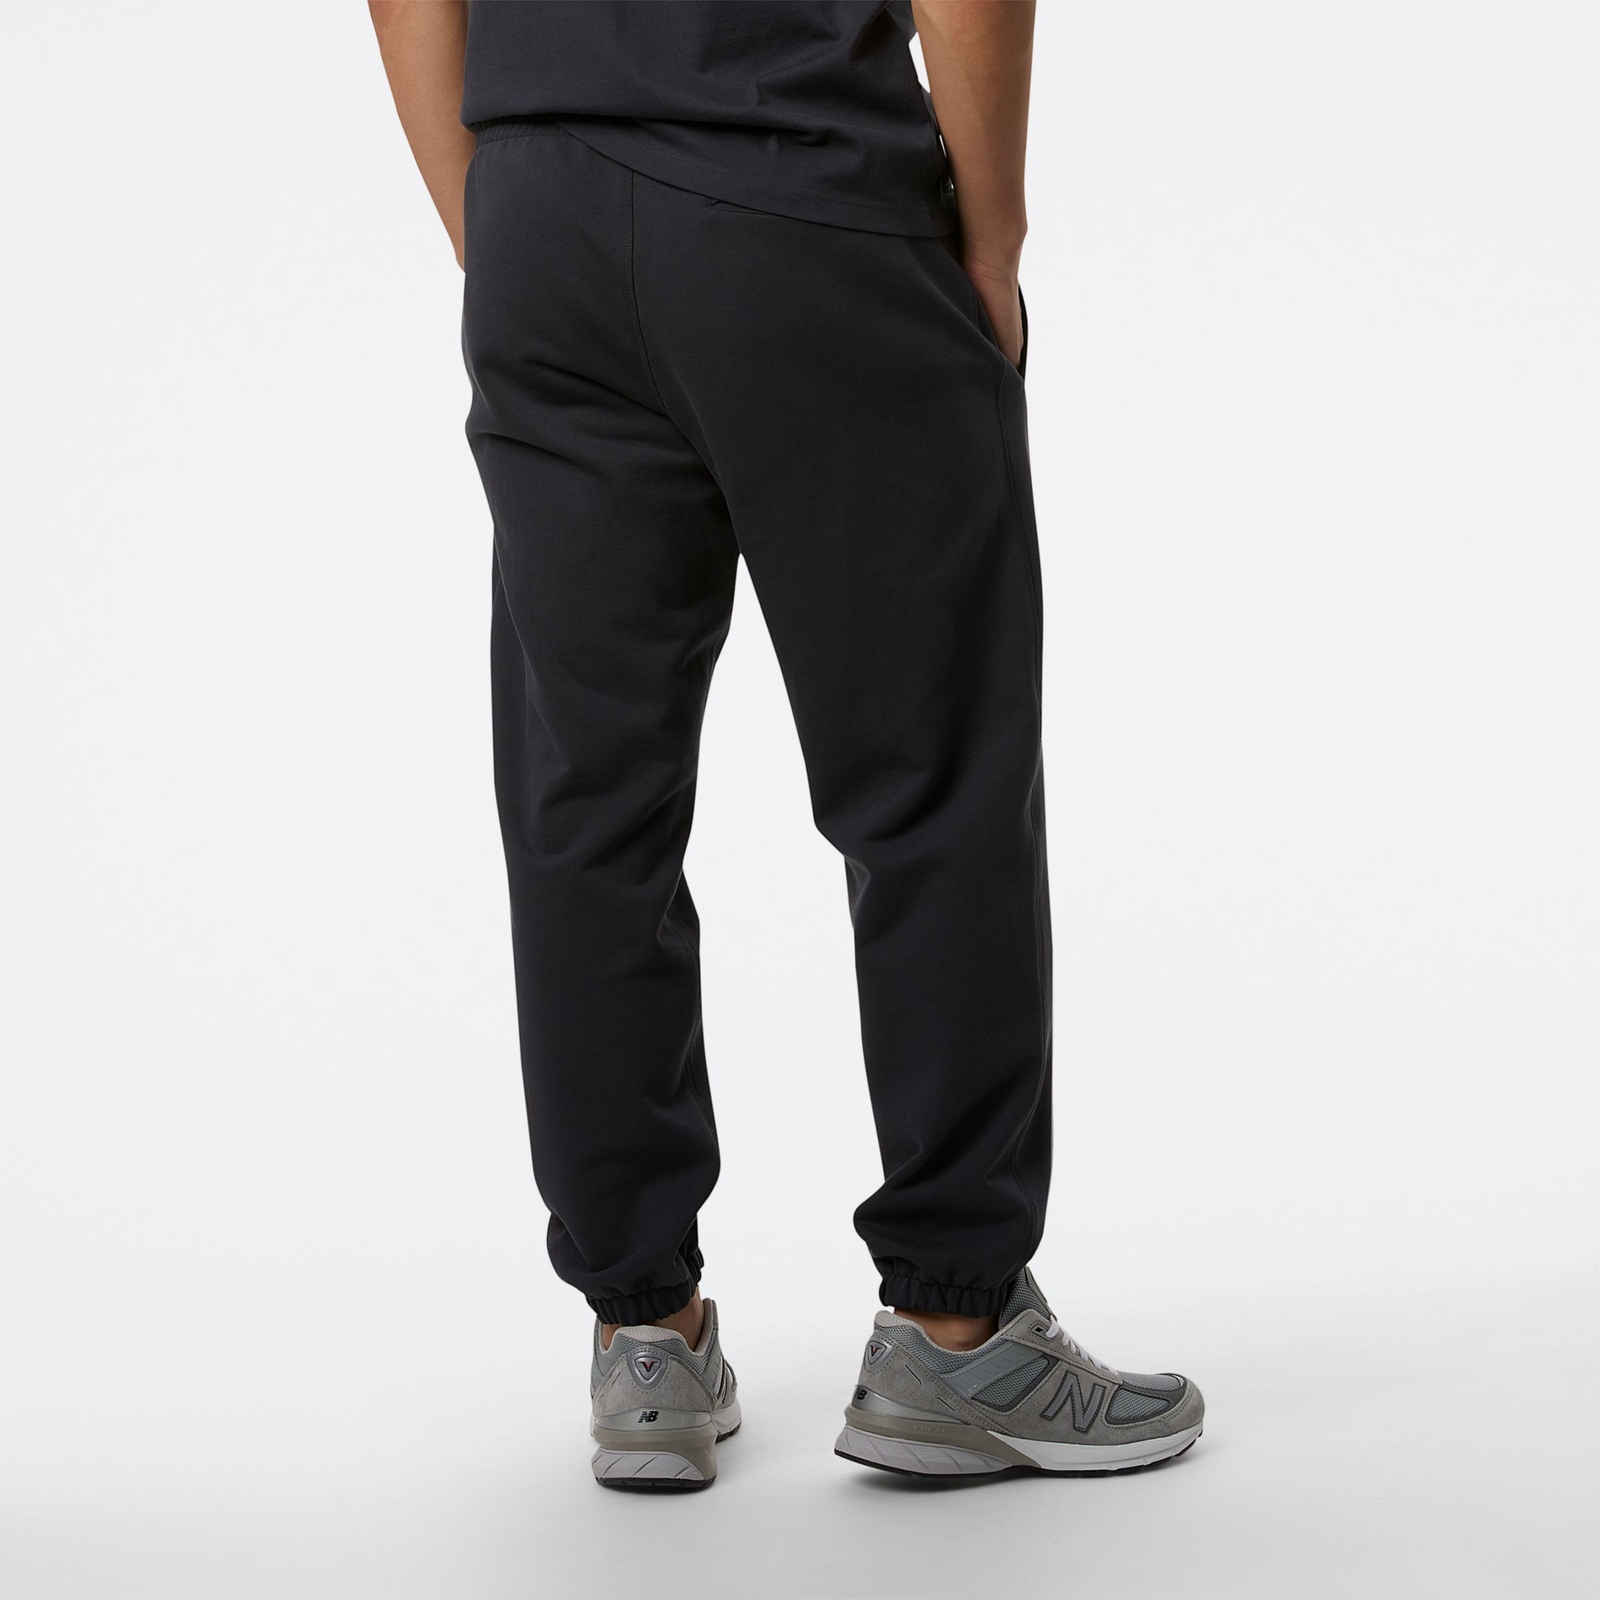 New Balance Core Knit Pants, Men : Buy Online at Best Price in KSA - Souq  is now : Fashion